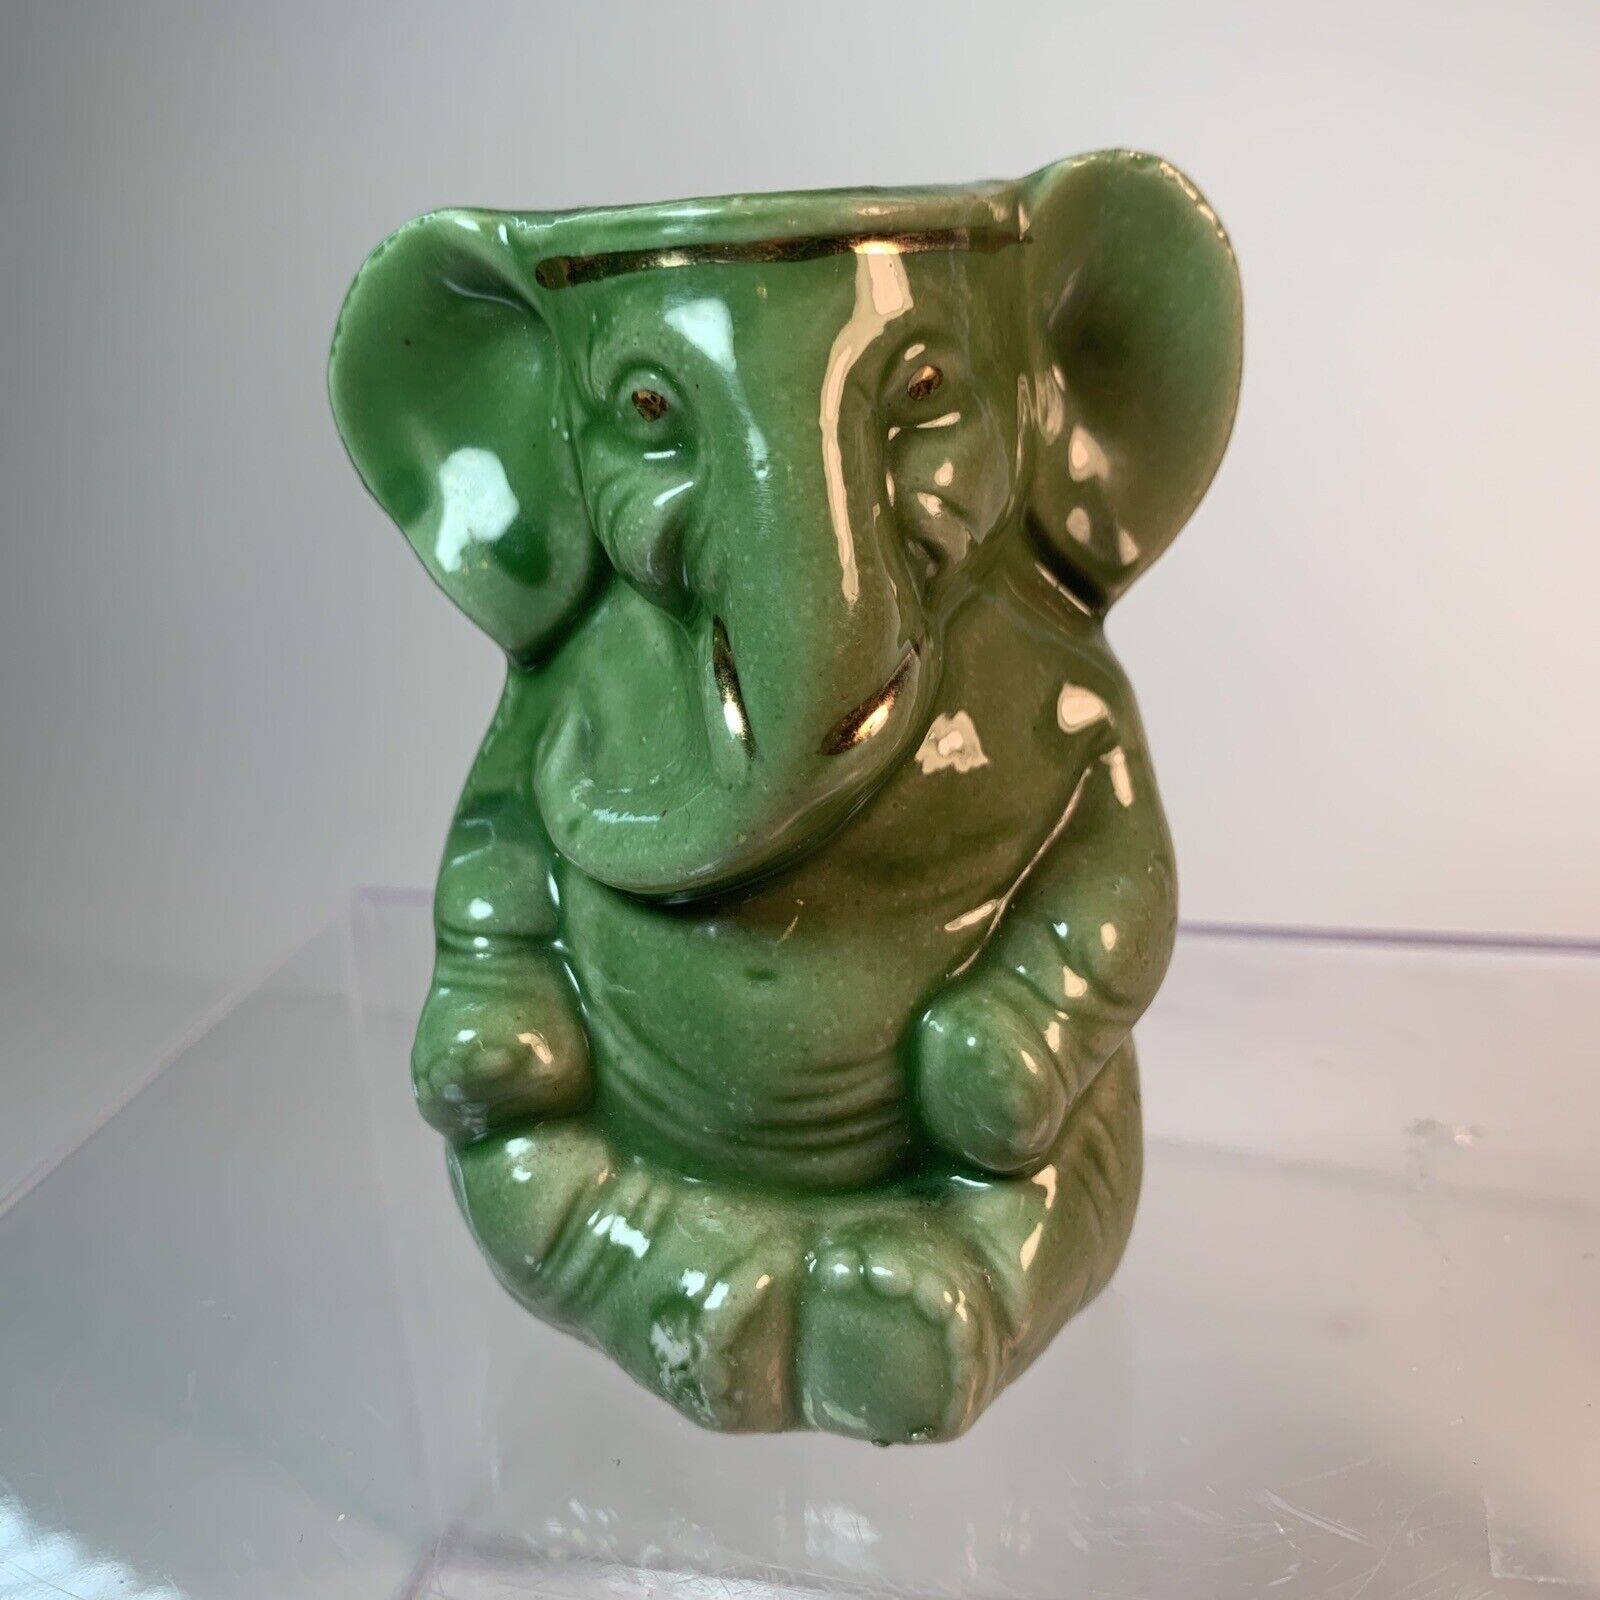 1920 Kenny C D Baltimore Elephant Toothpick /Match Holder by Austria Ceramics CO